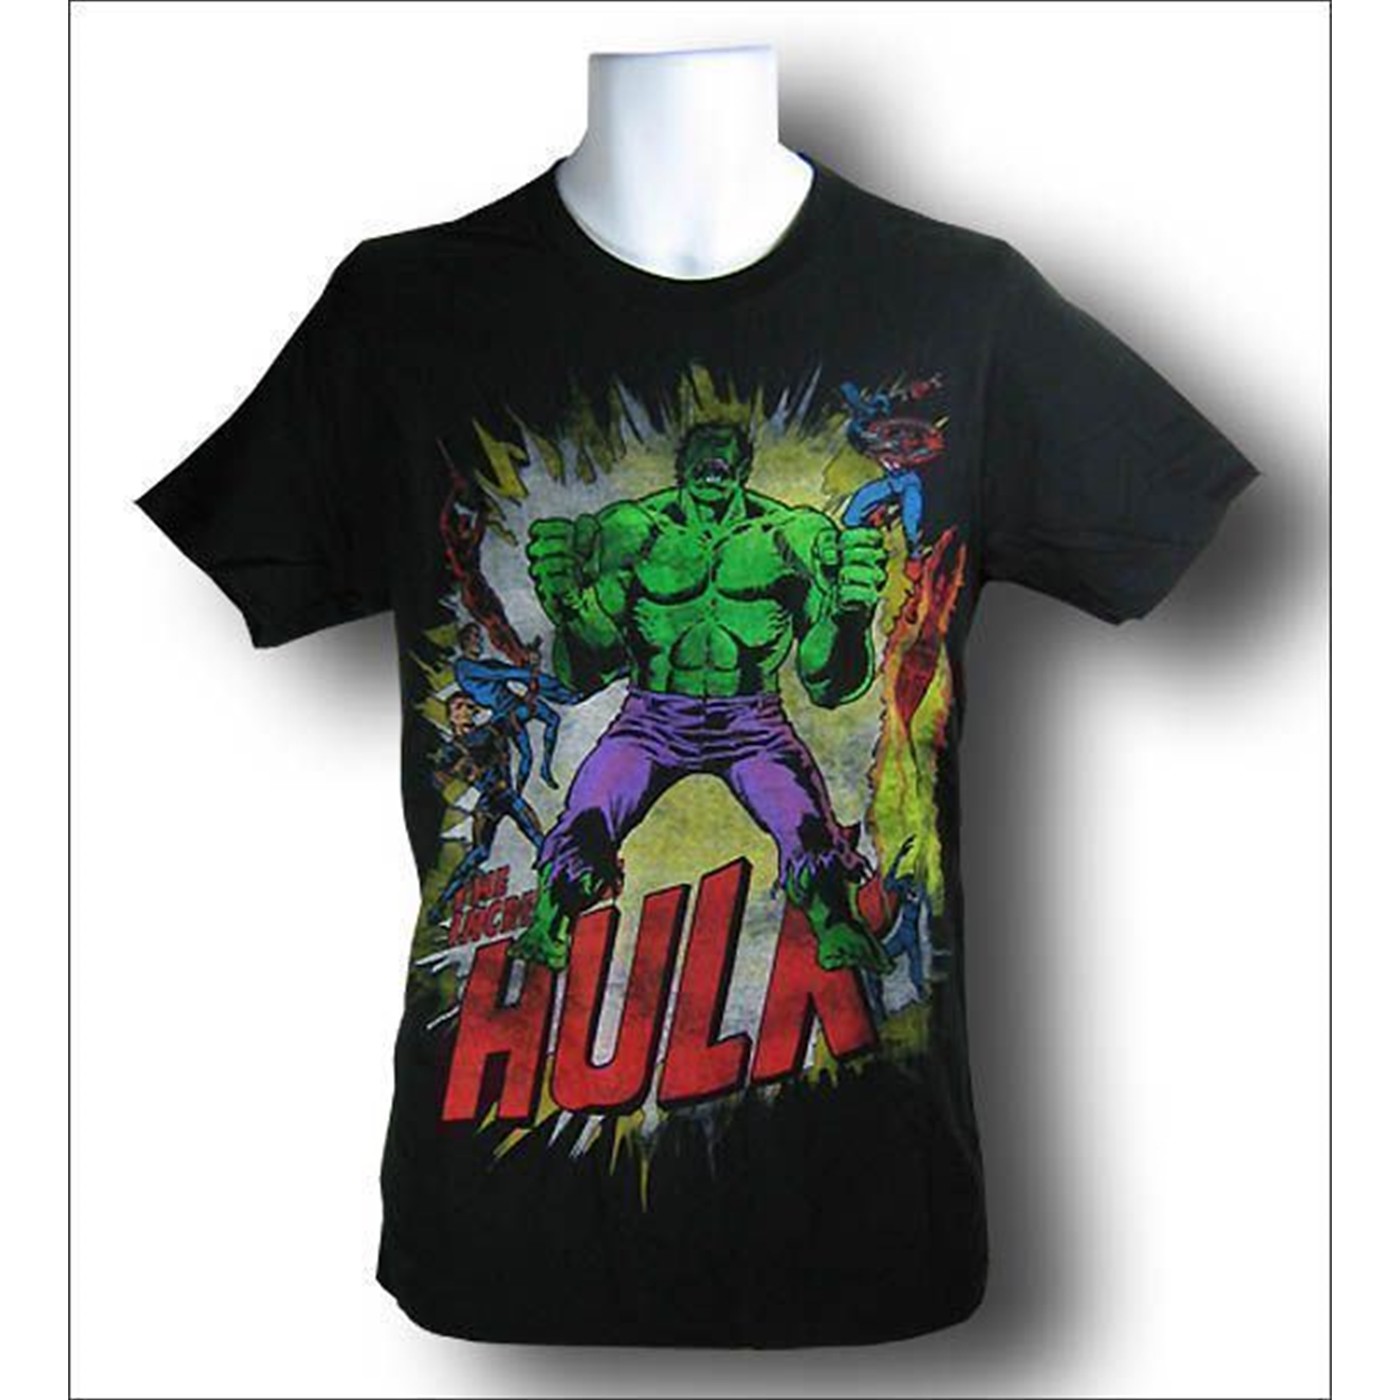 The Hulk Explosion T-Shirt